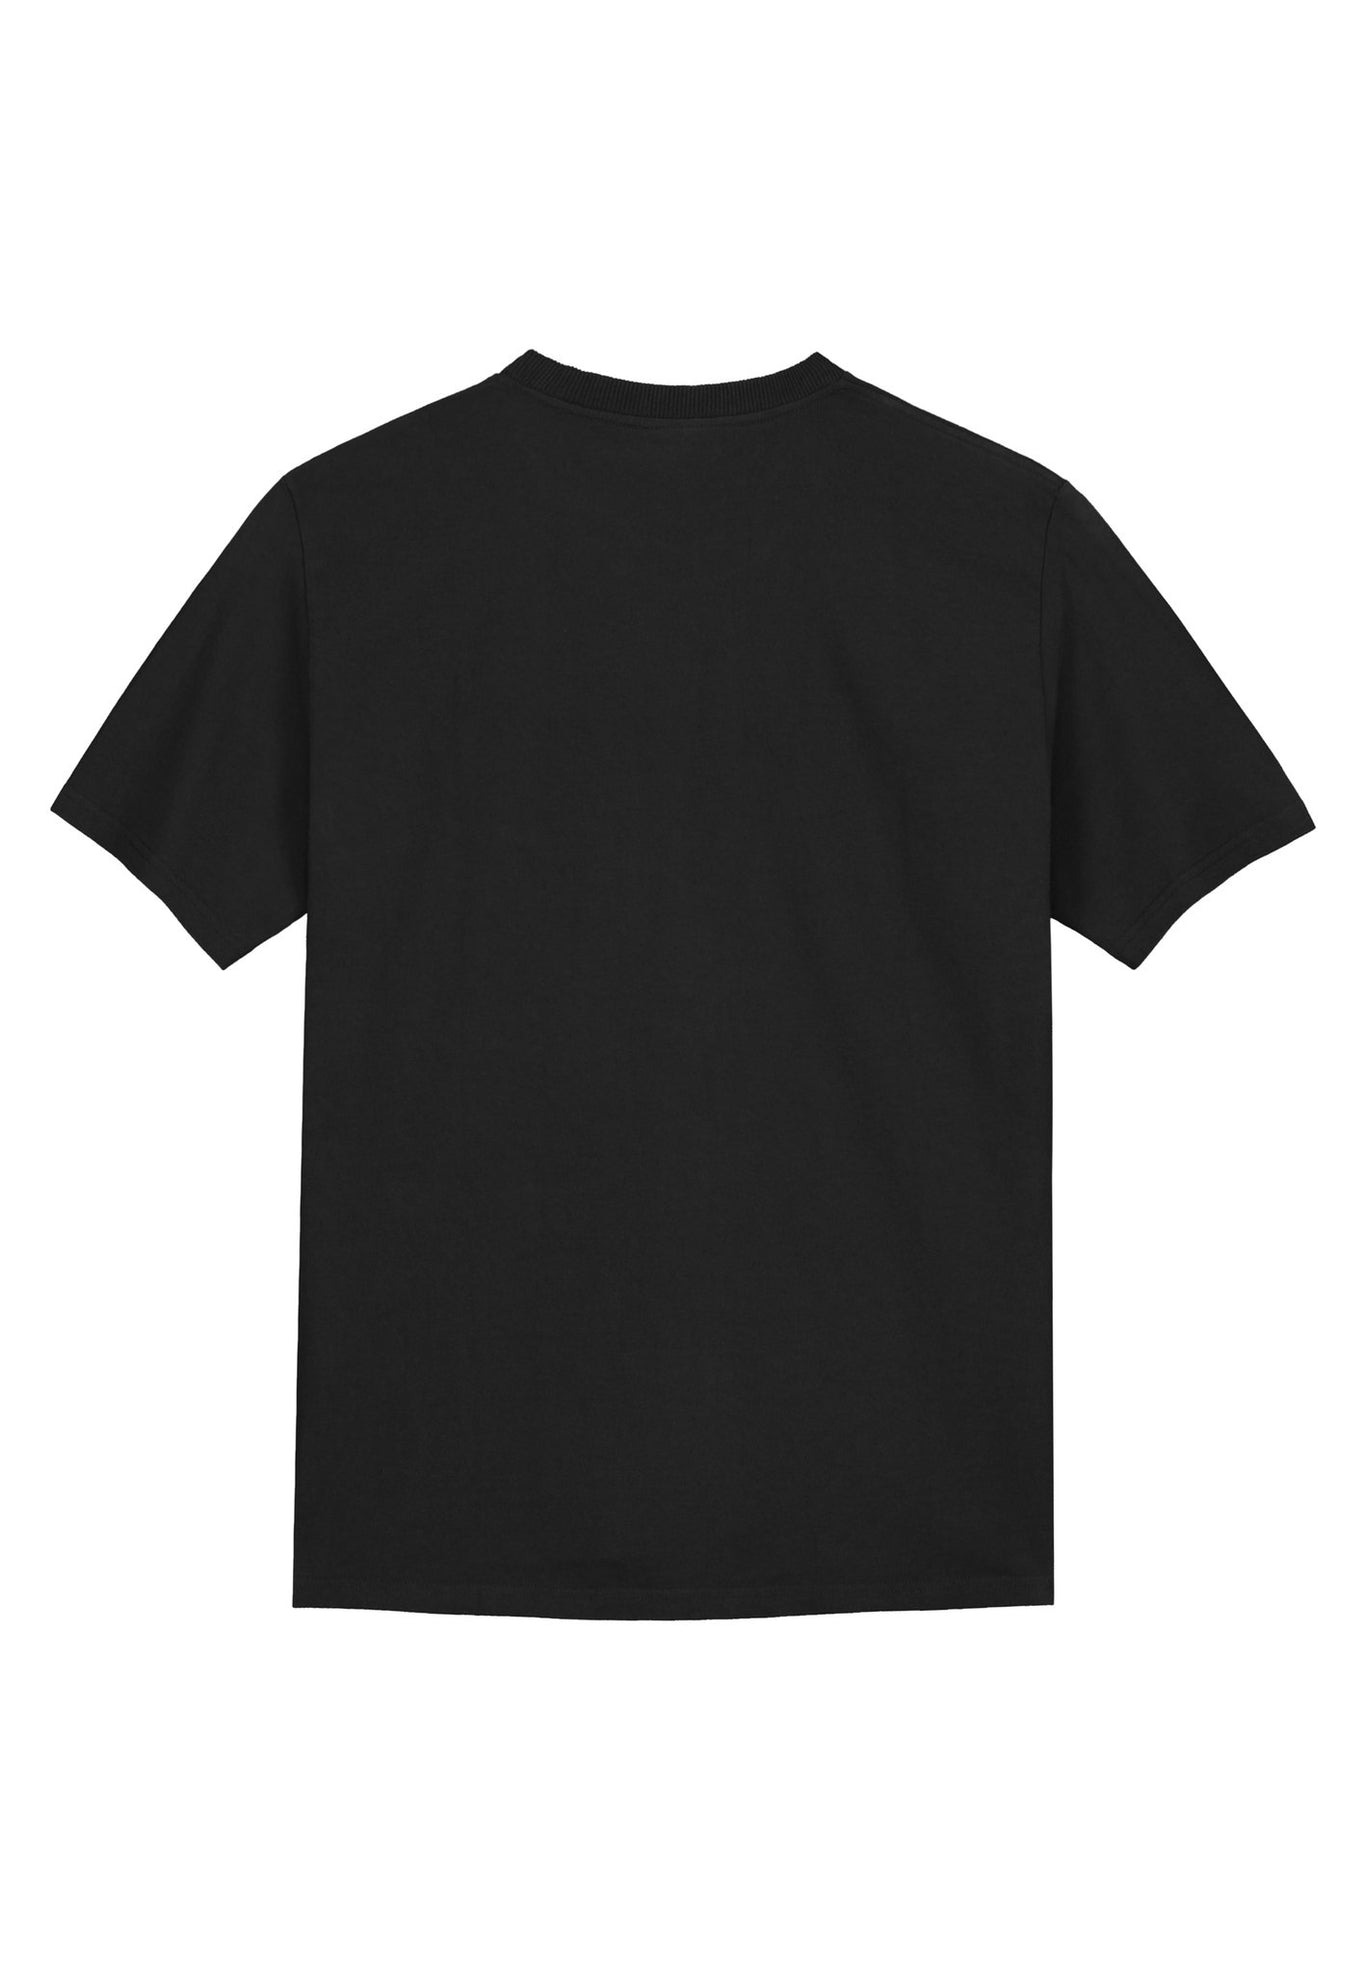 Full Circle Black T-Shirt